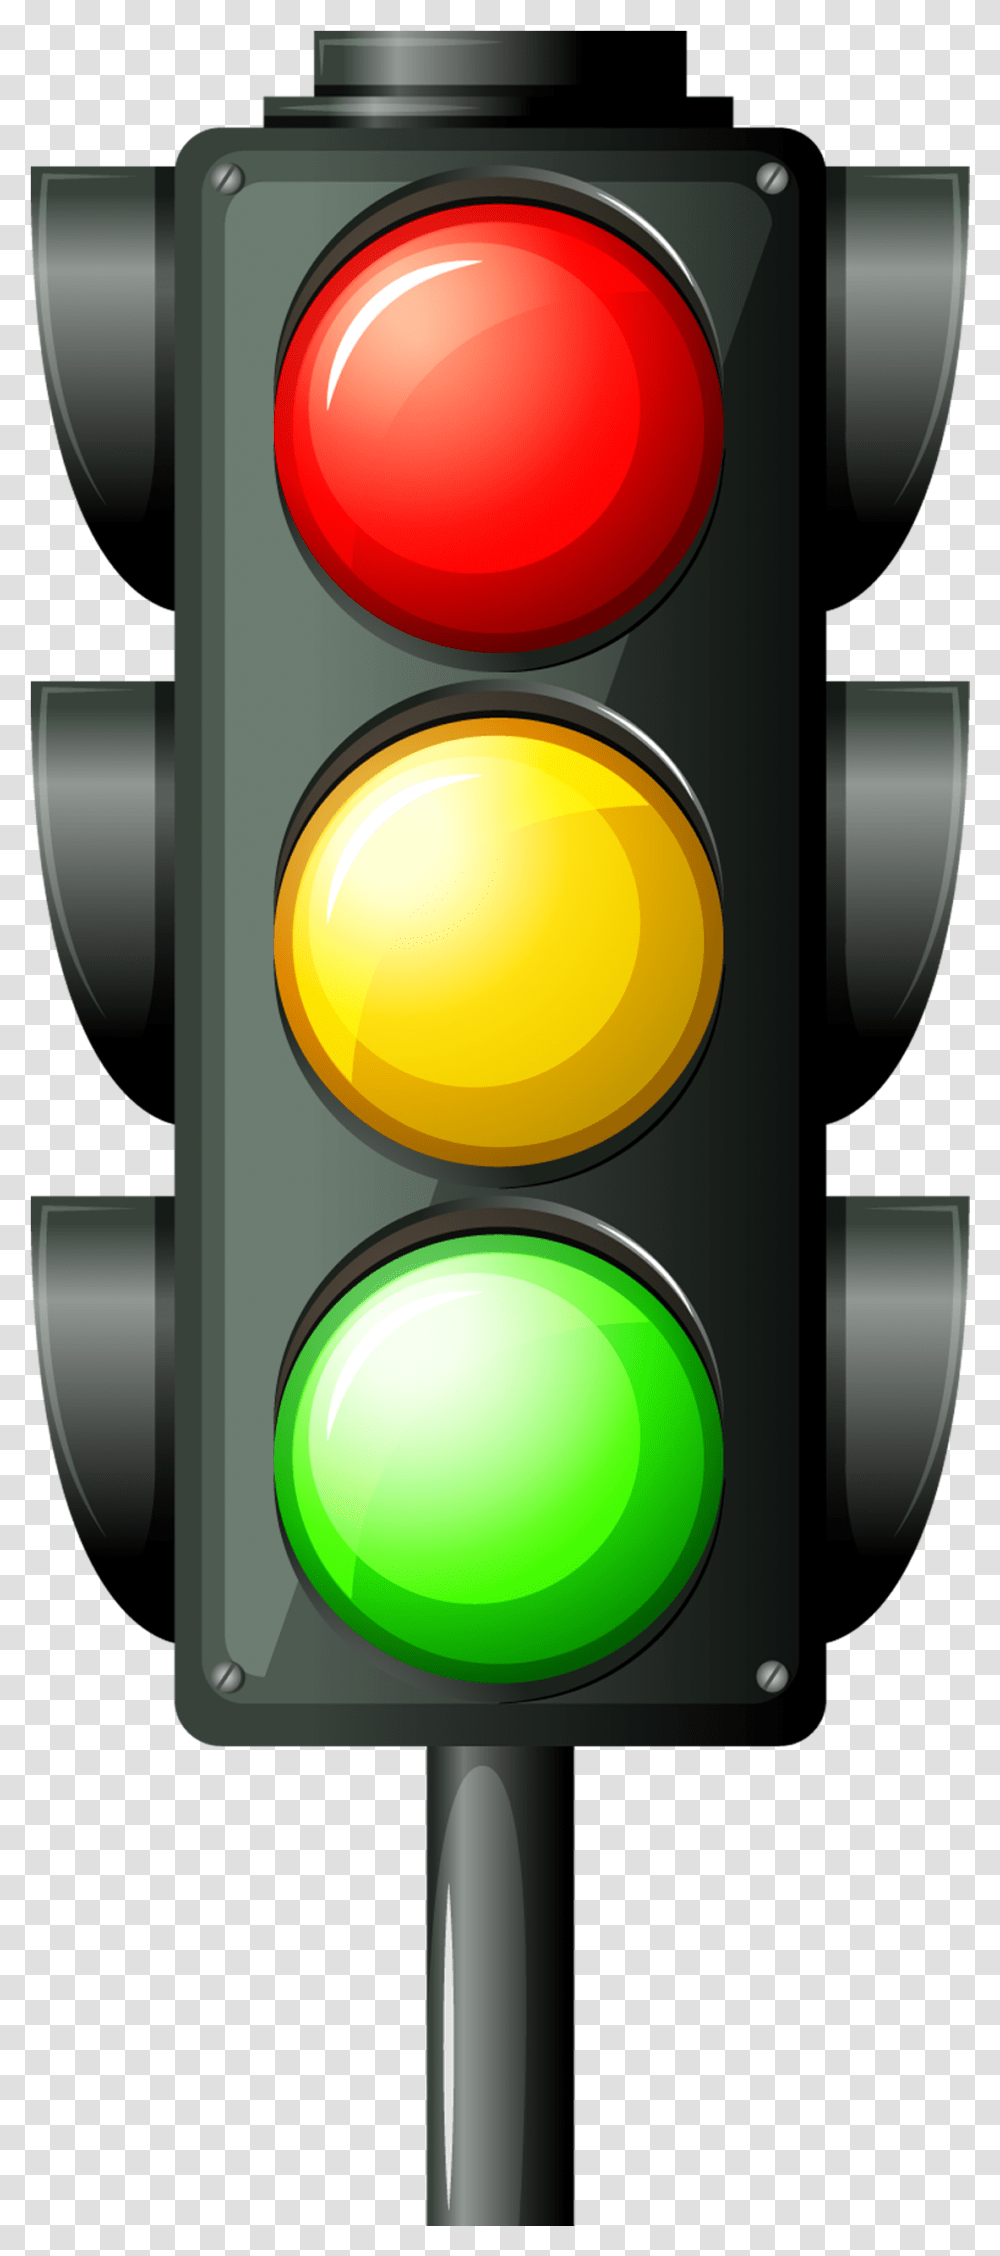 Traffic Light Images Free Download Traffic Light Transparent Png